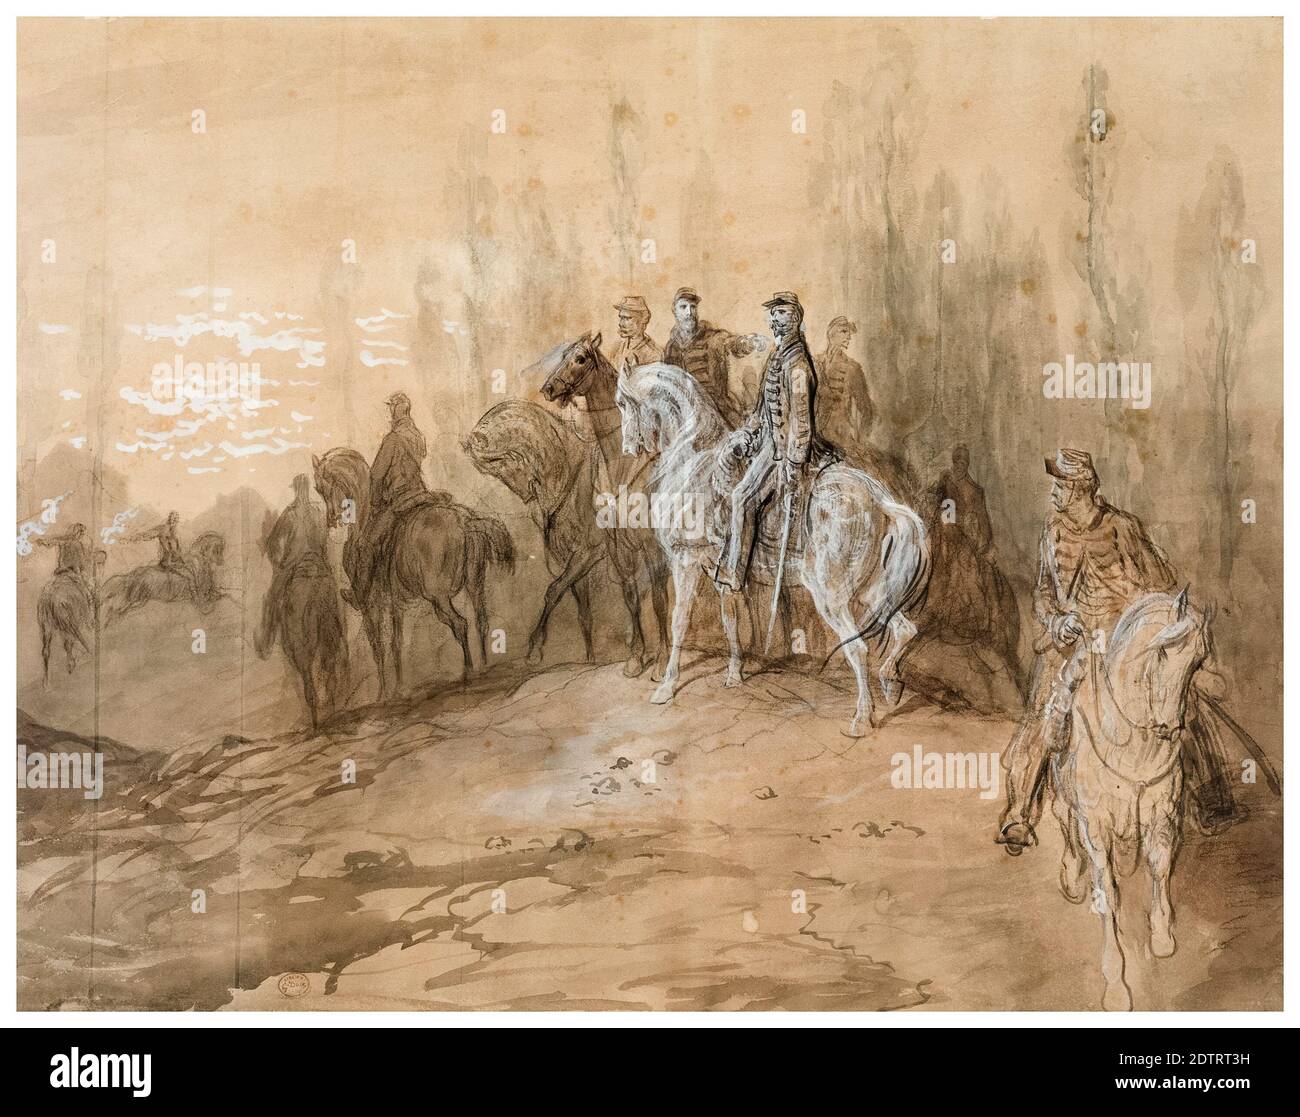 Gustave Doré, episodio de la guerra franco-prusiana, dibujo, antes de 1883 Foto de stock